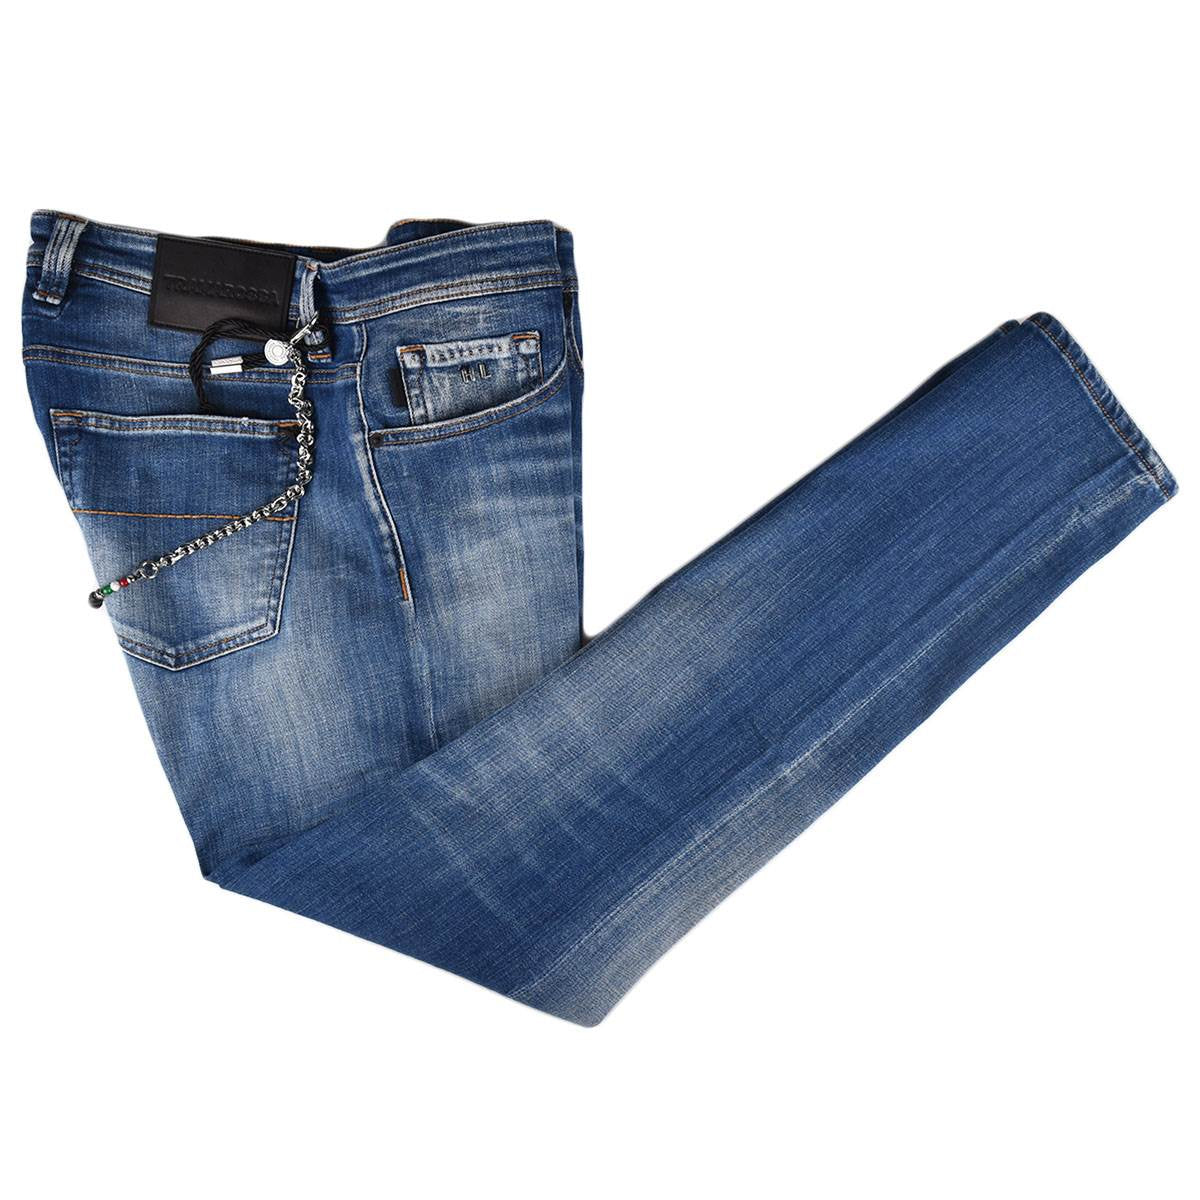 Tramarossa Coton Bleu Ea Jeans